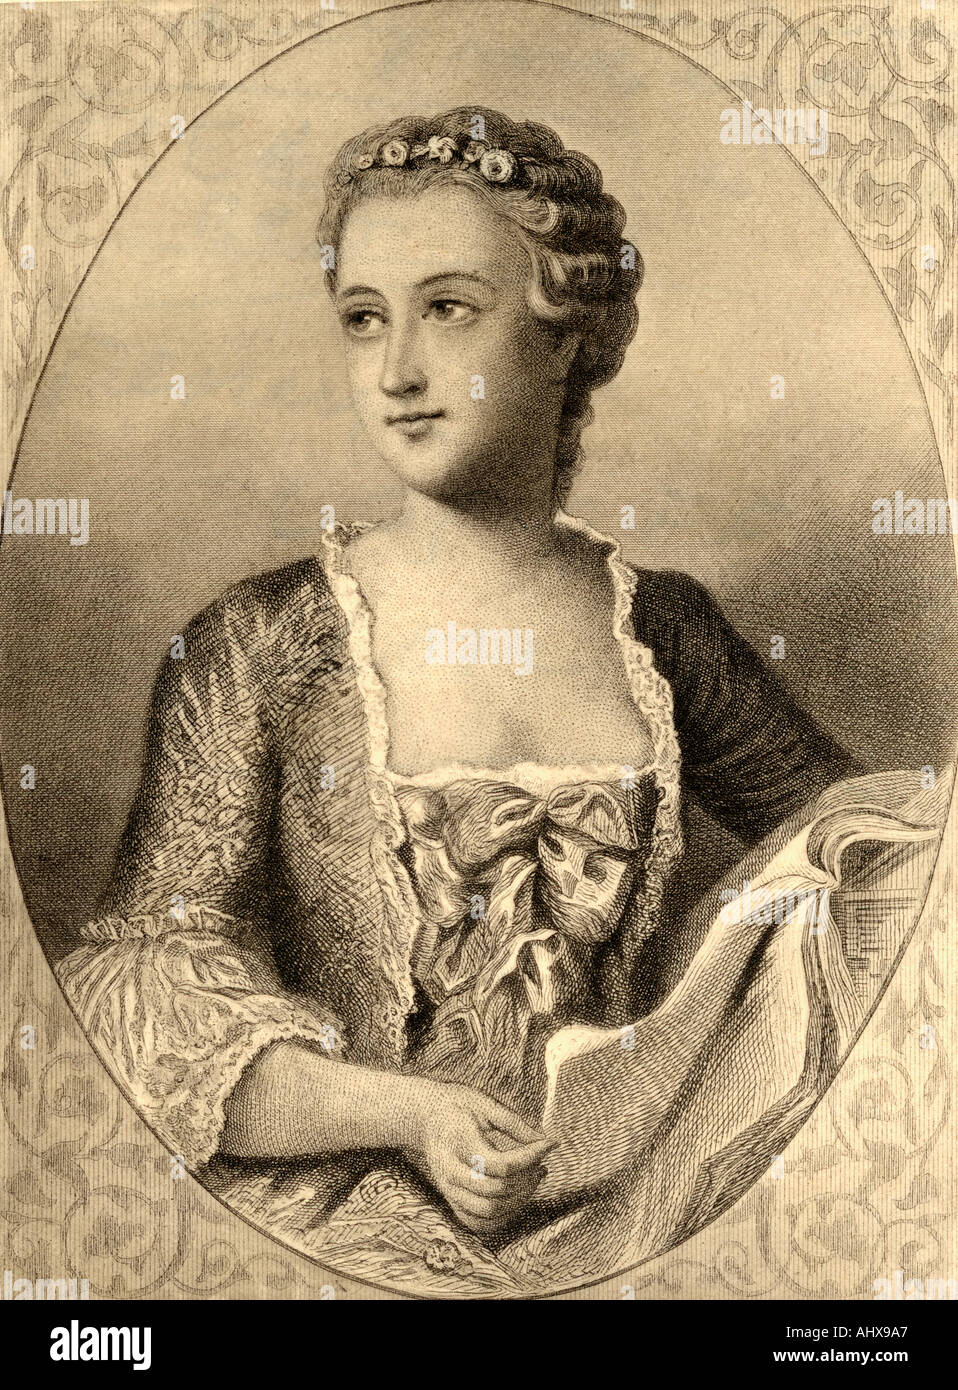 Jeanne Antoinette Poisson, Marquise de Pompadour, aka Madame de Pompadour, 1721 - 1764. French mistress to Louis XV. Stock Photo